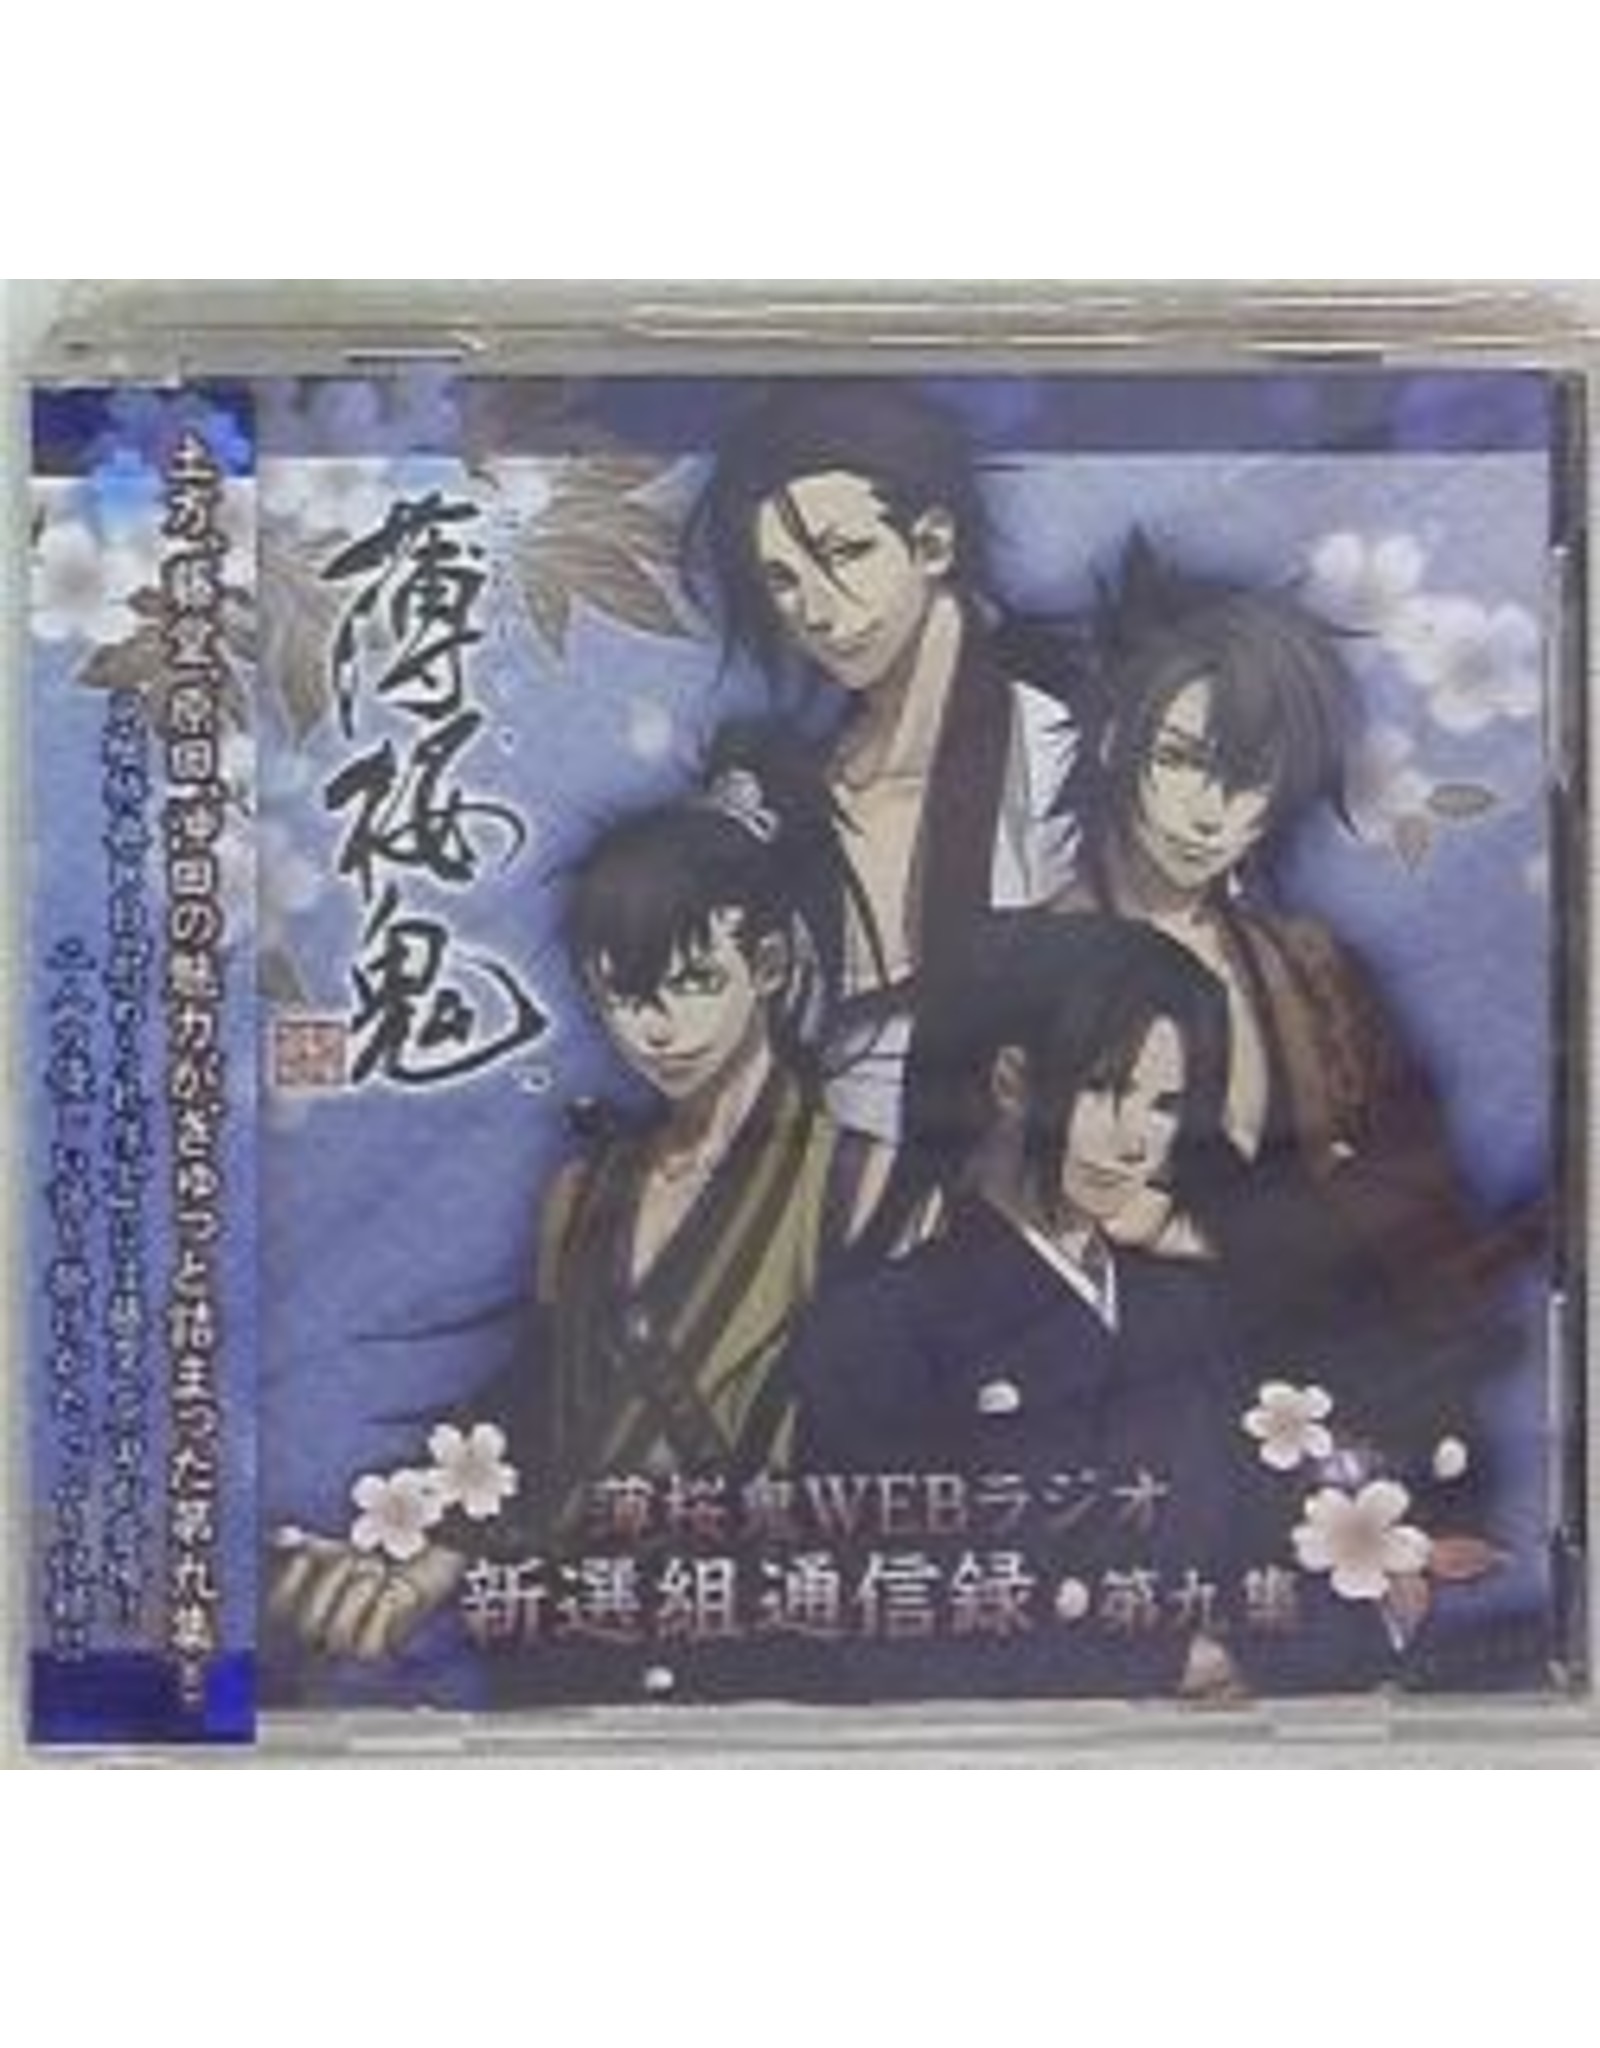 Hakuouki Communication Record 9 CD (Used)